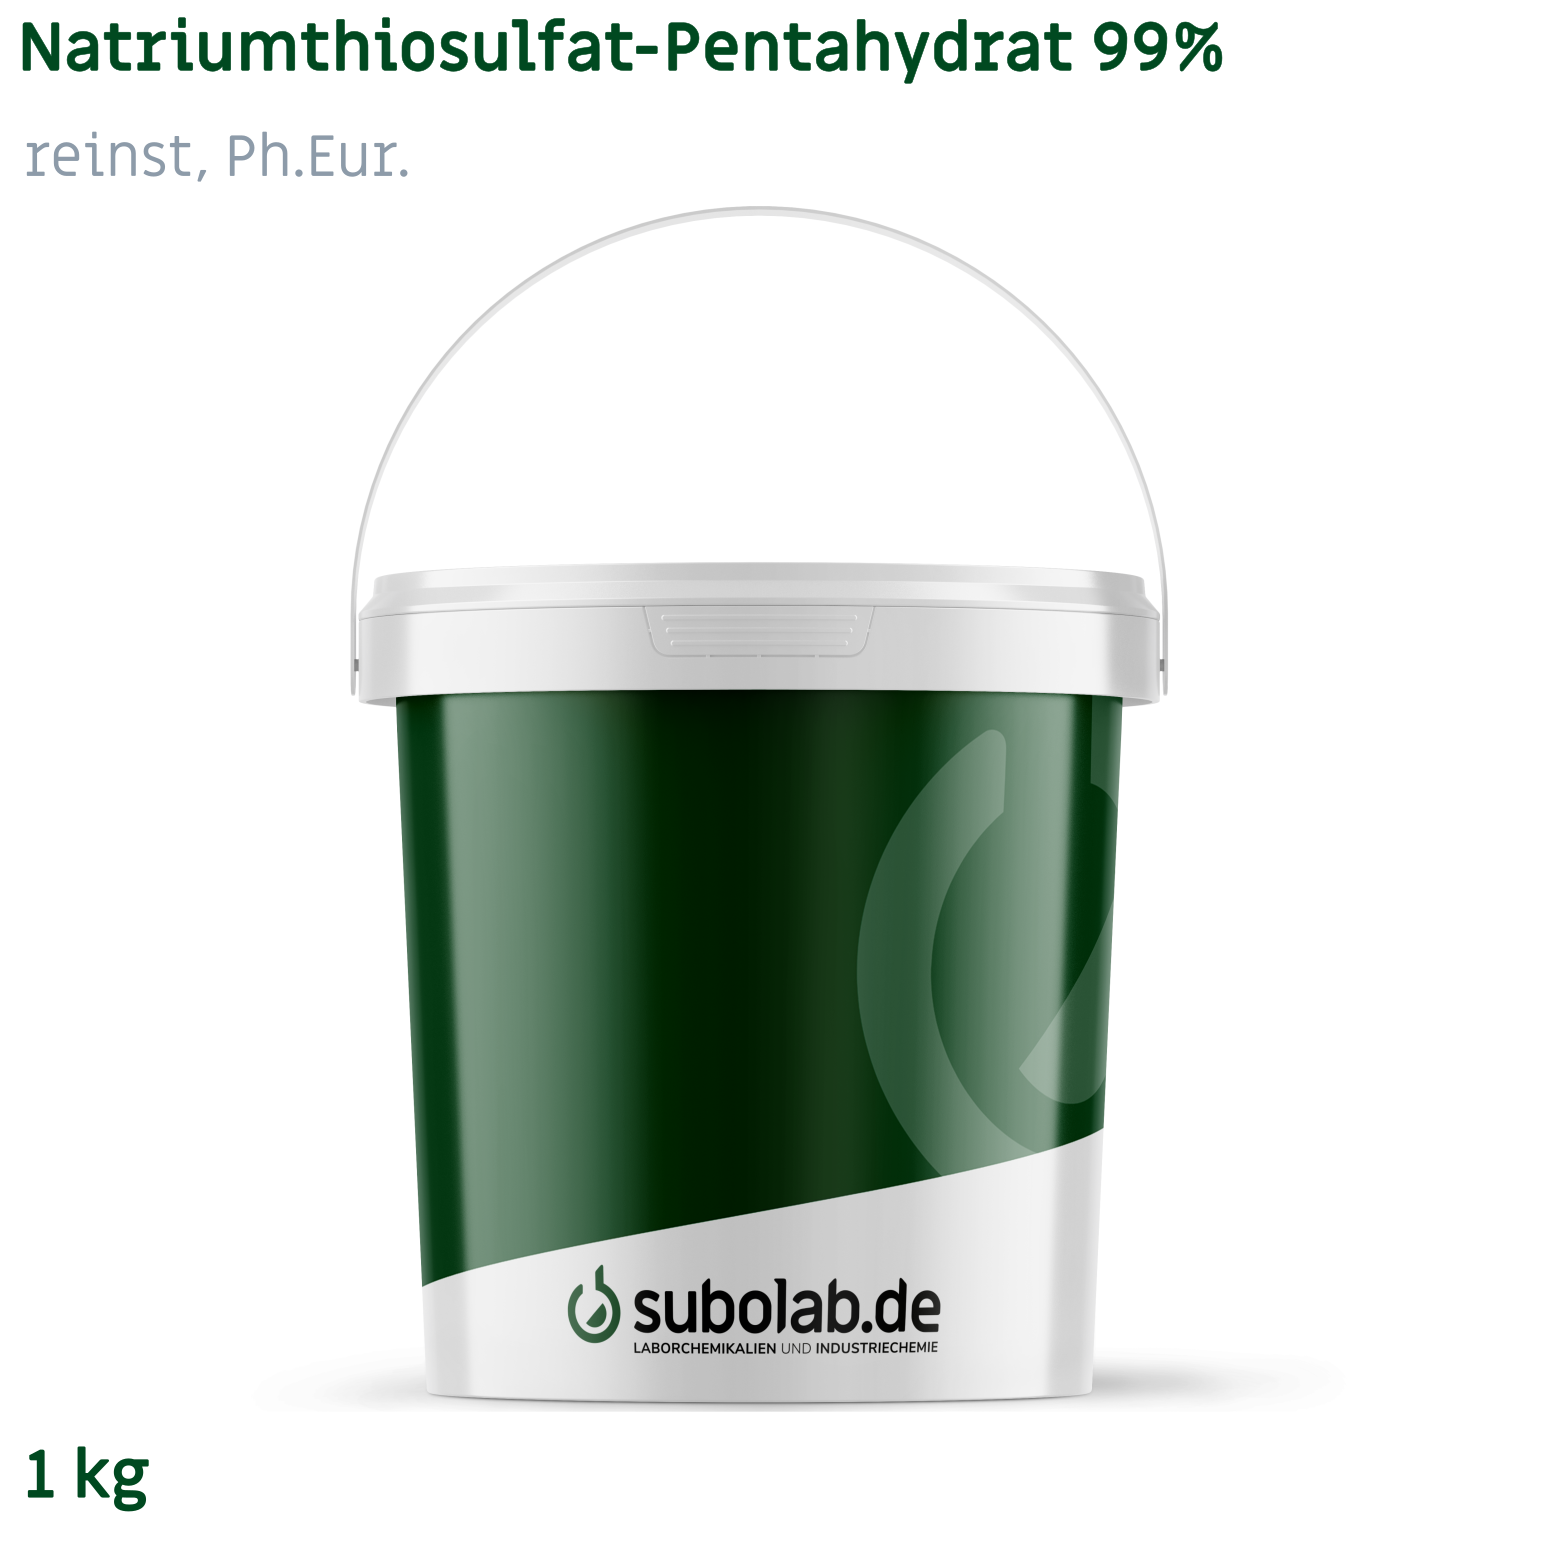 Bild von Natriumthiosulfat - Pentahydrat 99% reinst, Ph.Eur. (1 kg)